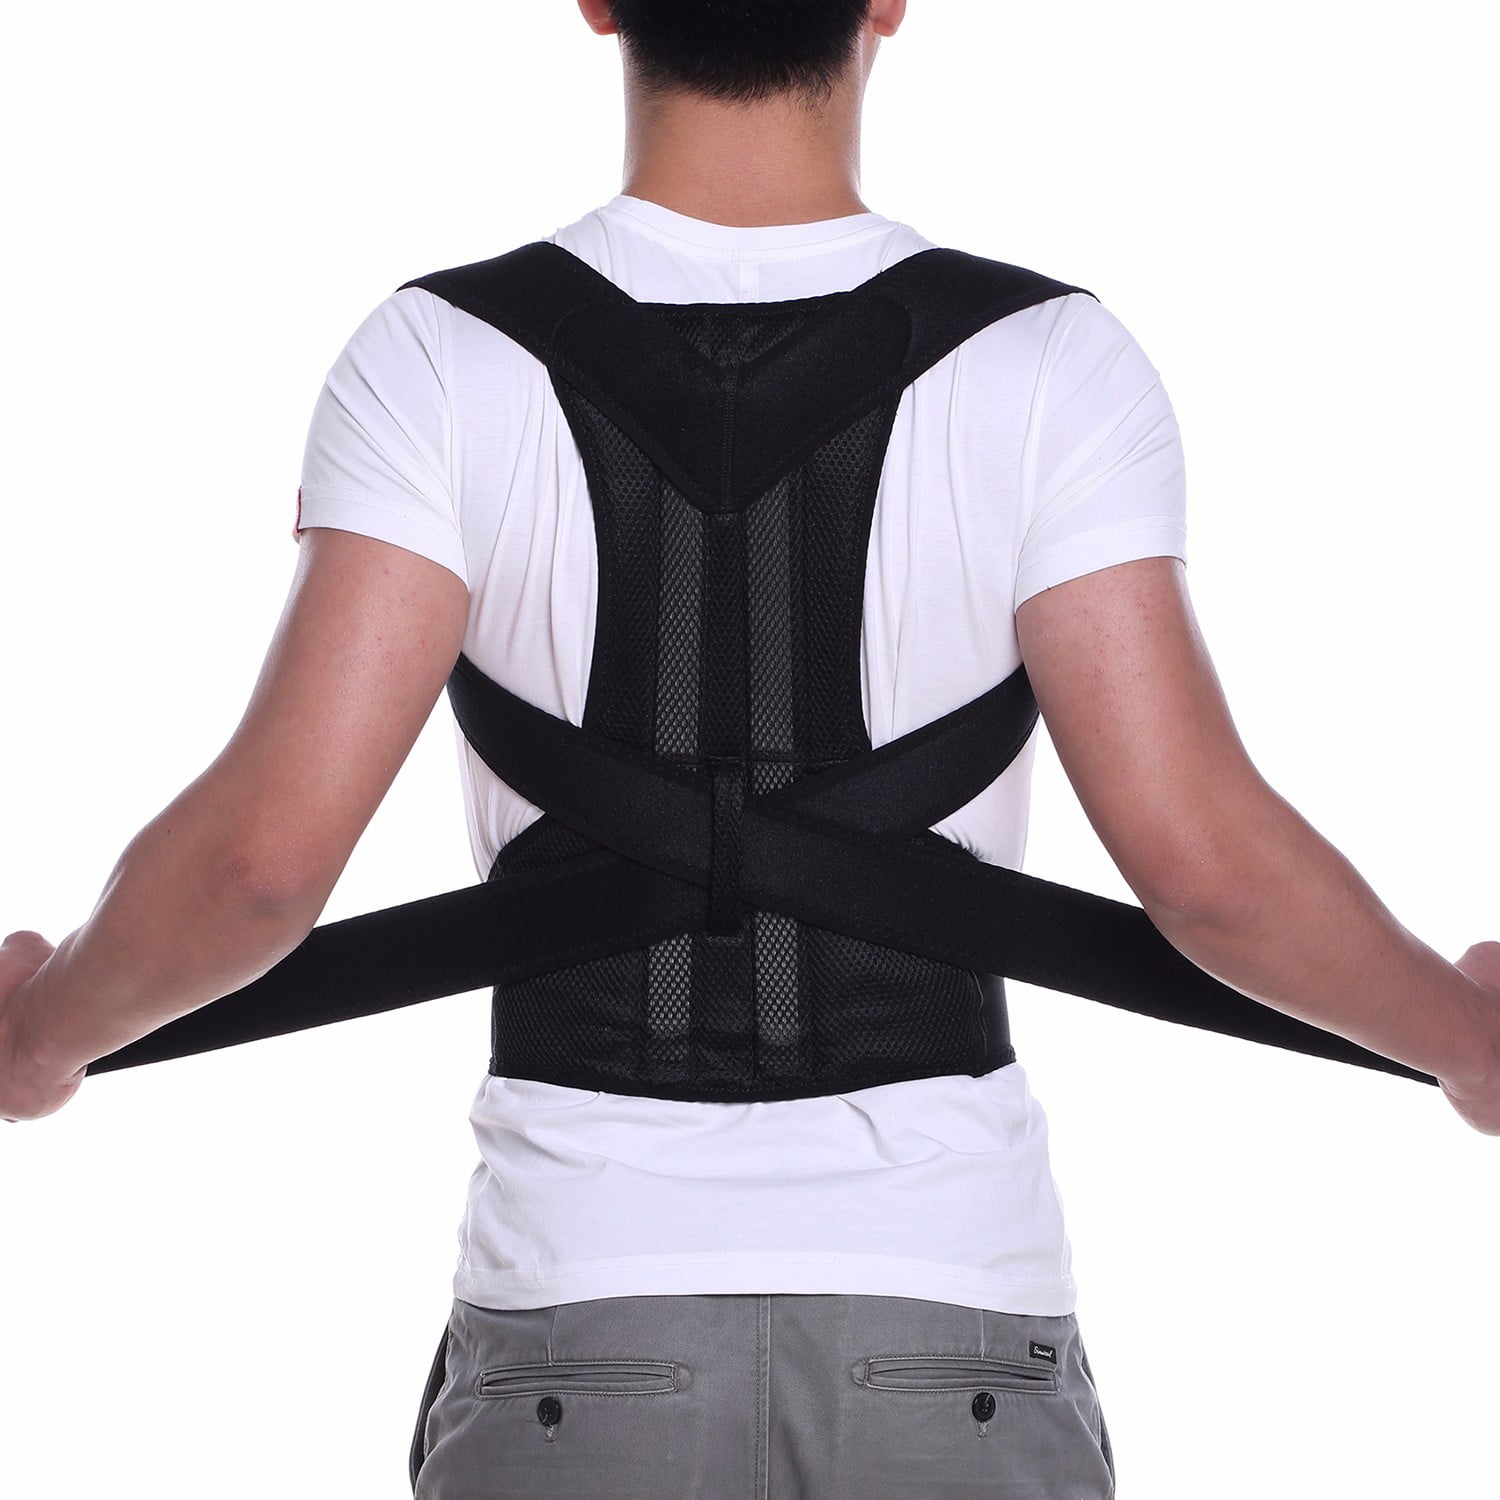 2019 Back Straightener Posture Corrector for Women and Men Shoulder Brace Back Posture Corrector for Men Upper Back Support and Neck Pain Relief-2